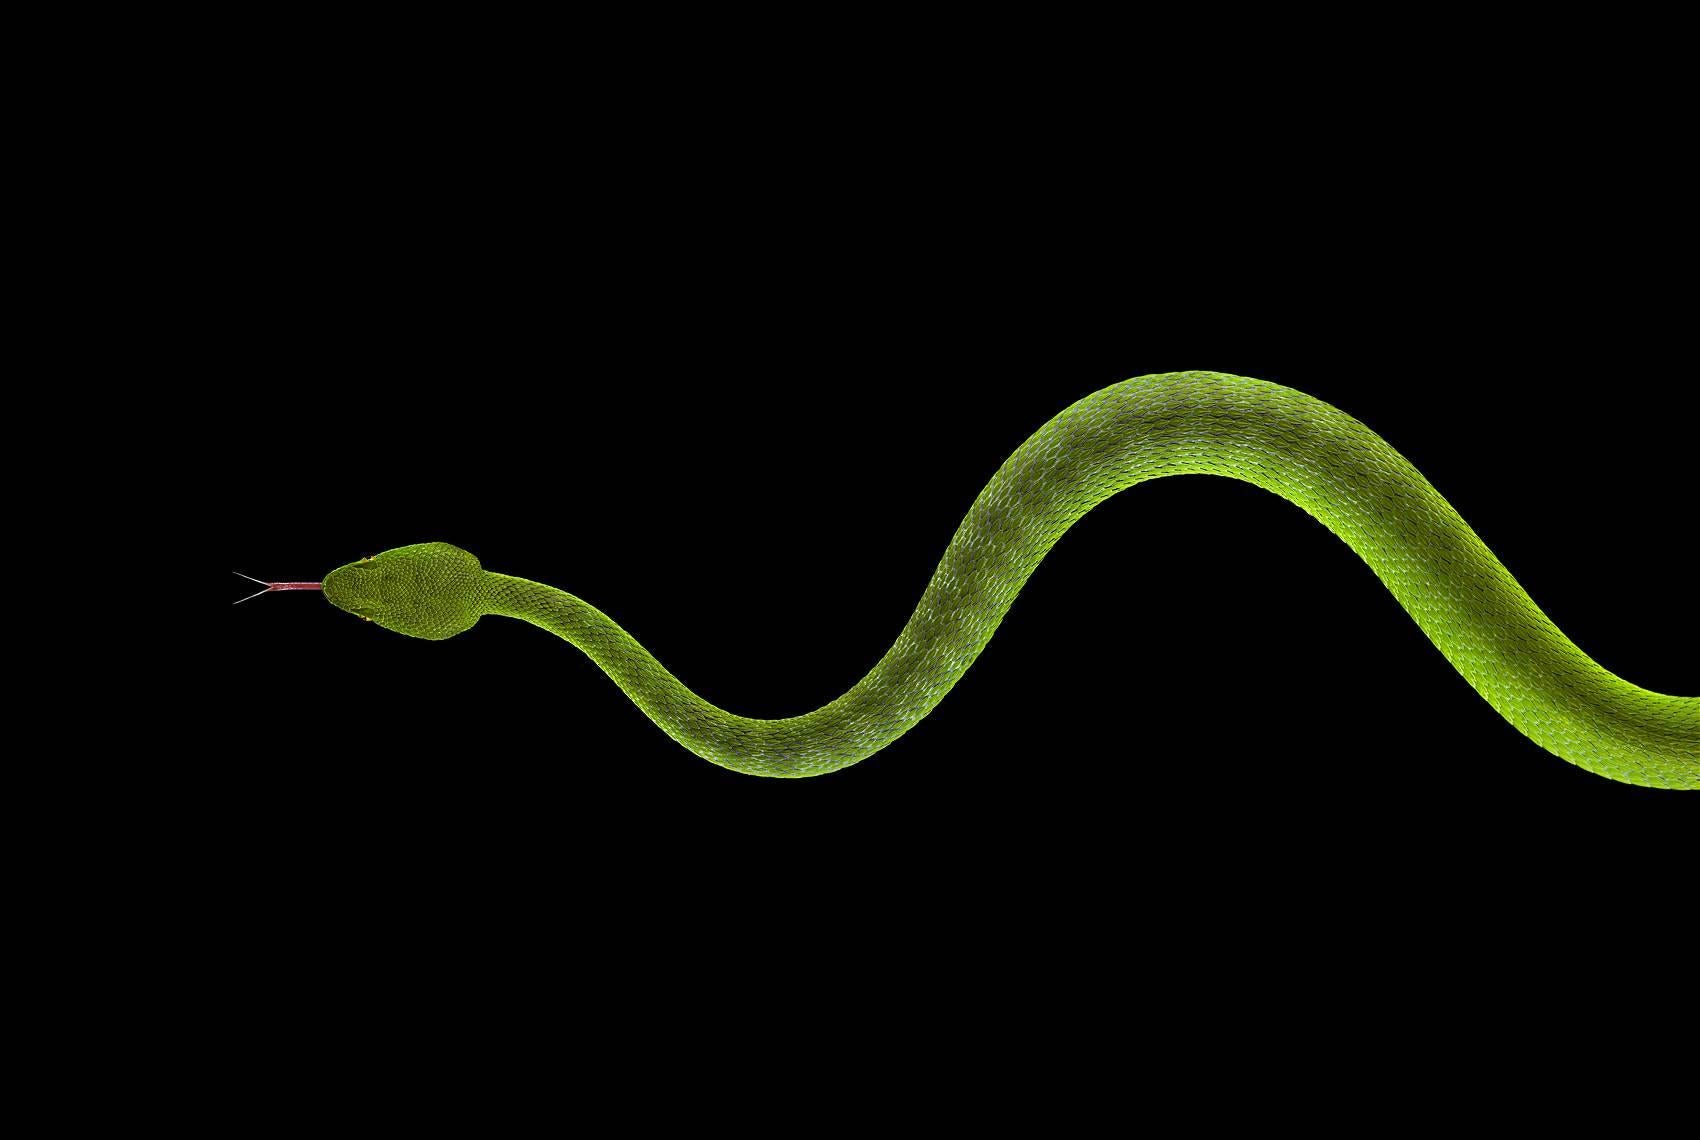 Brad Wilson Portrait Photograph - White Lipped Tree Viper #3 - Animal portrait photography, green snake